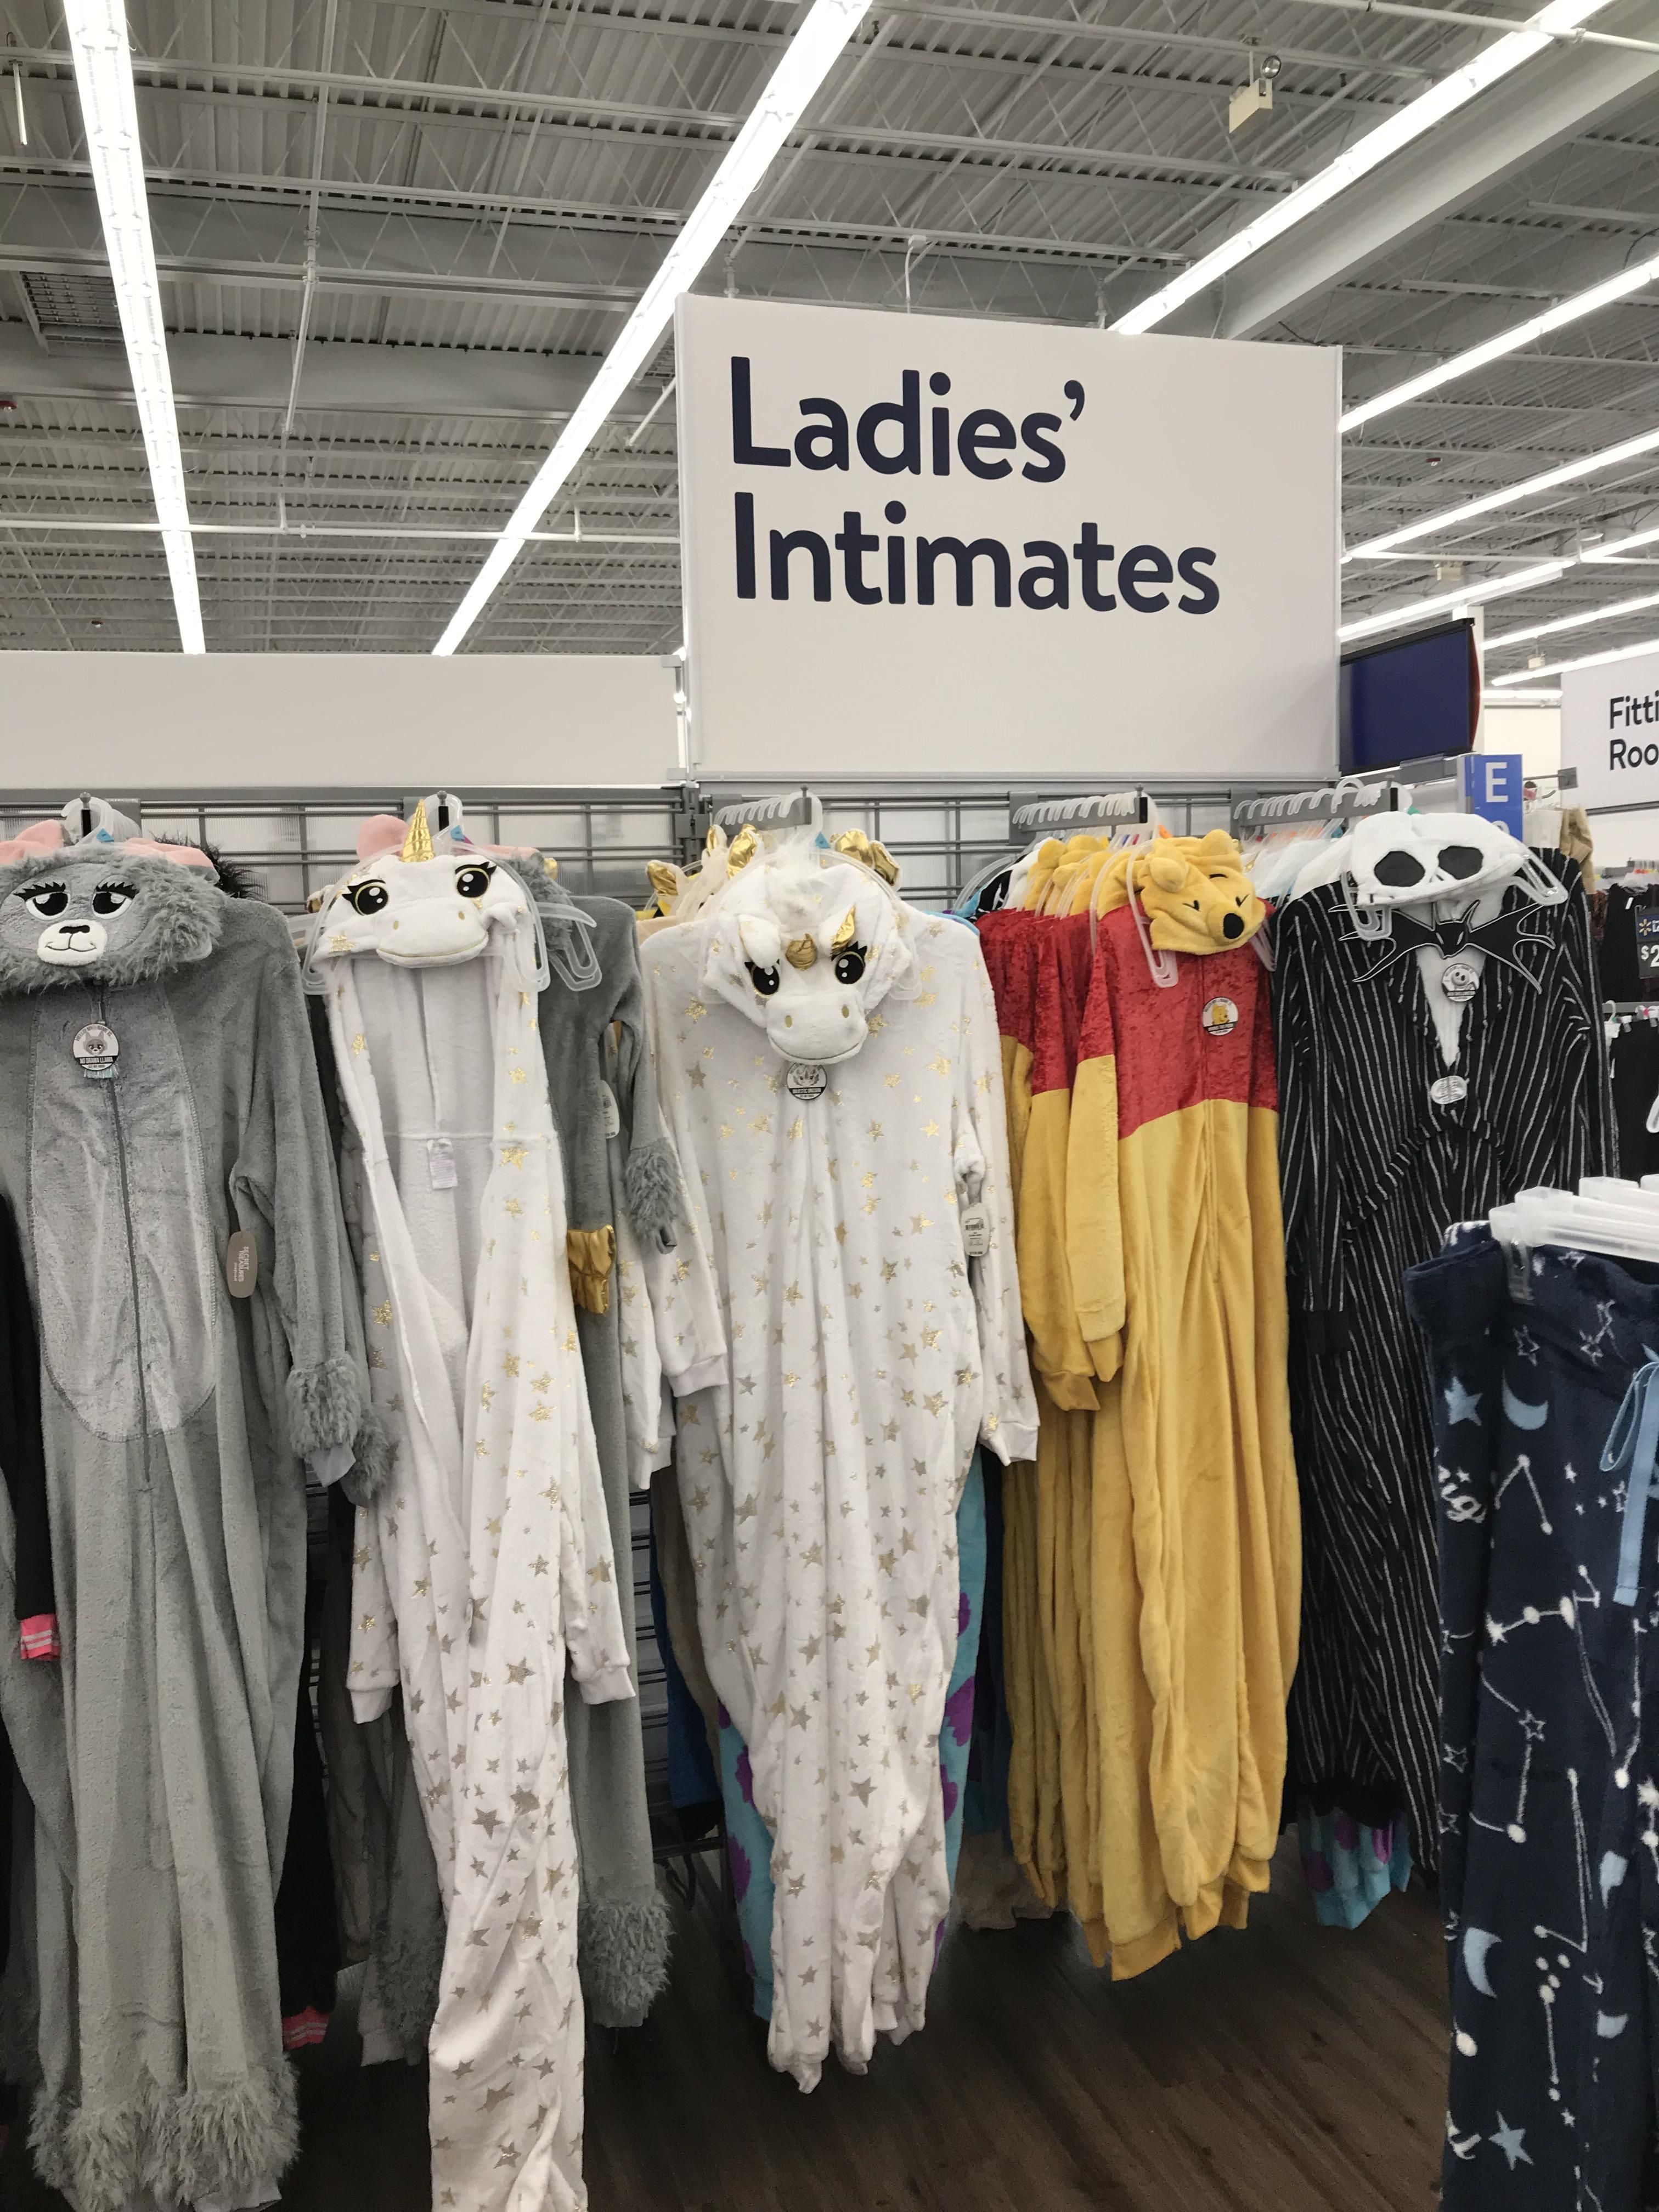 Getting intimate at Walmart.